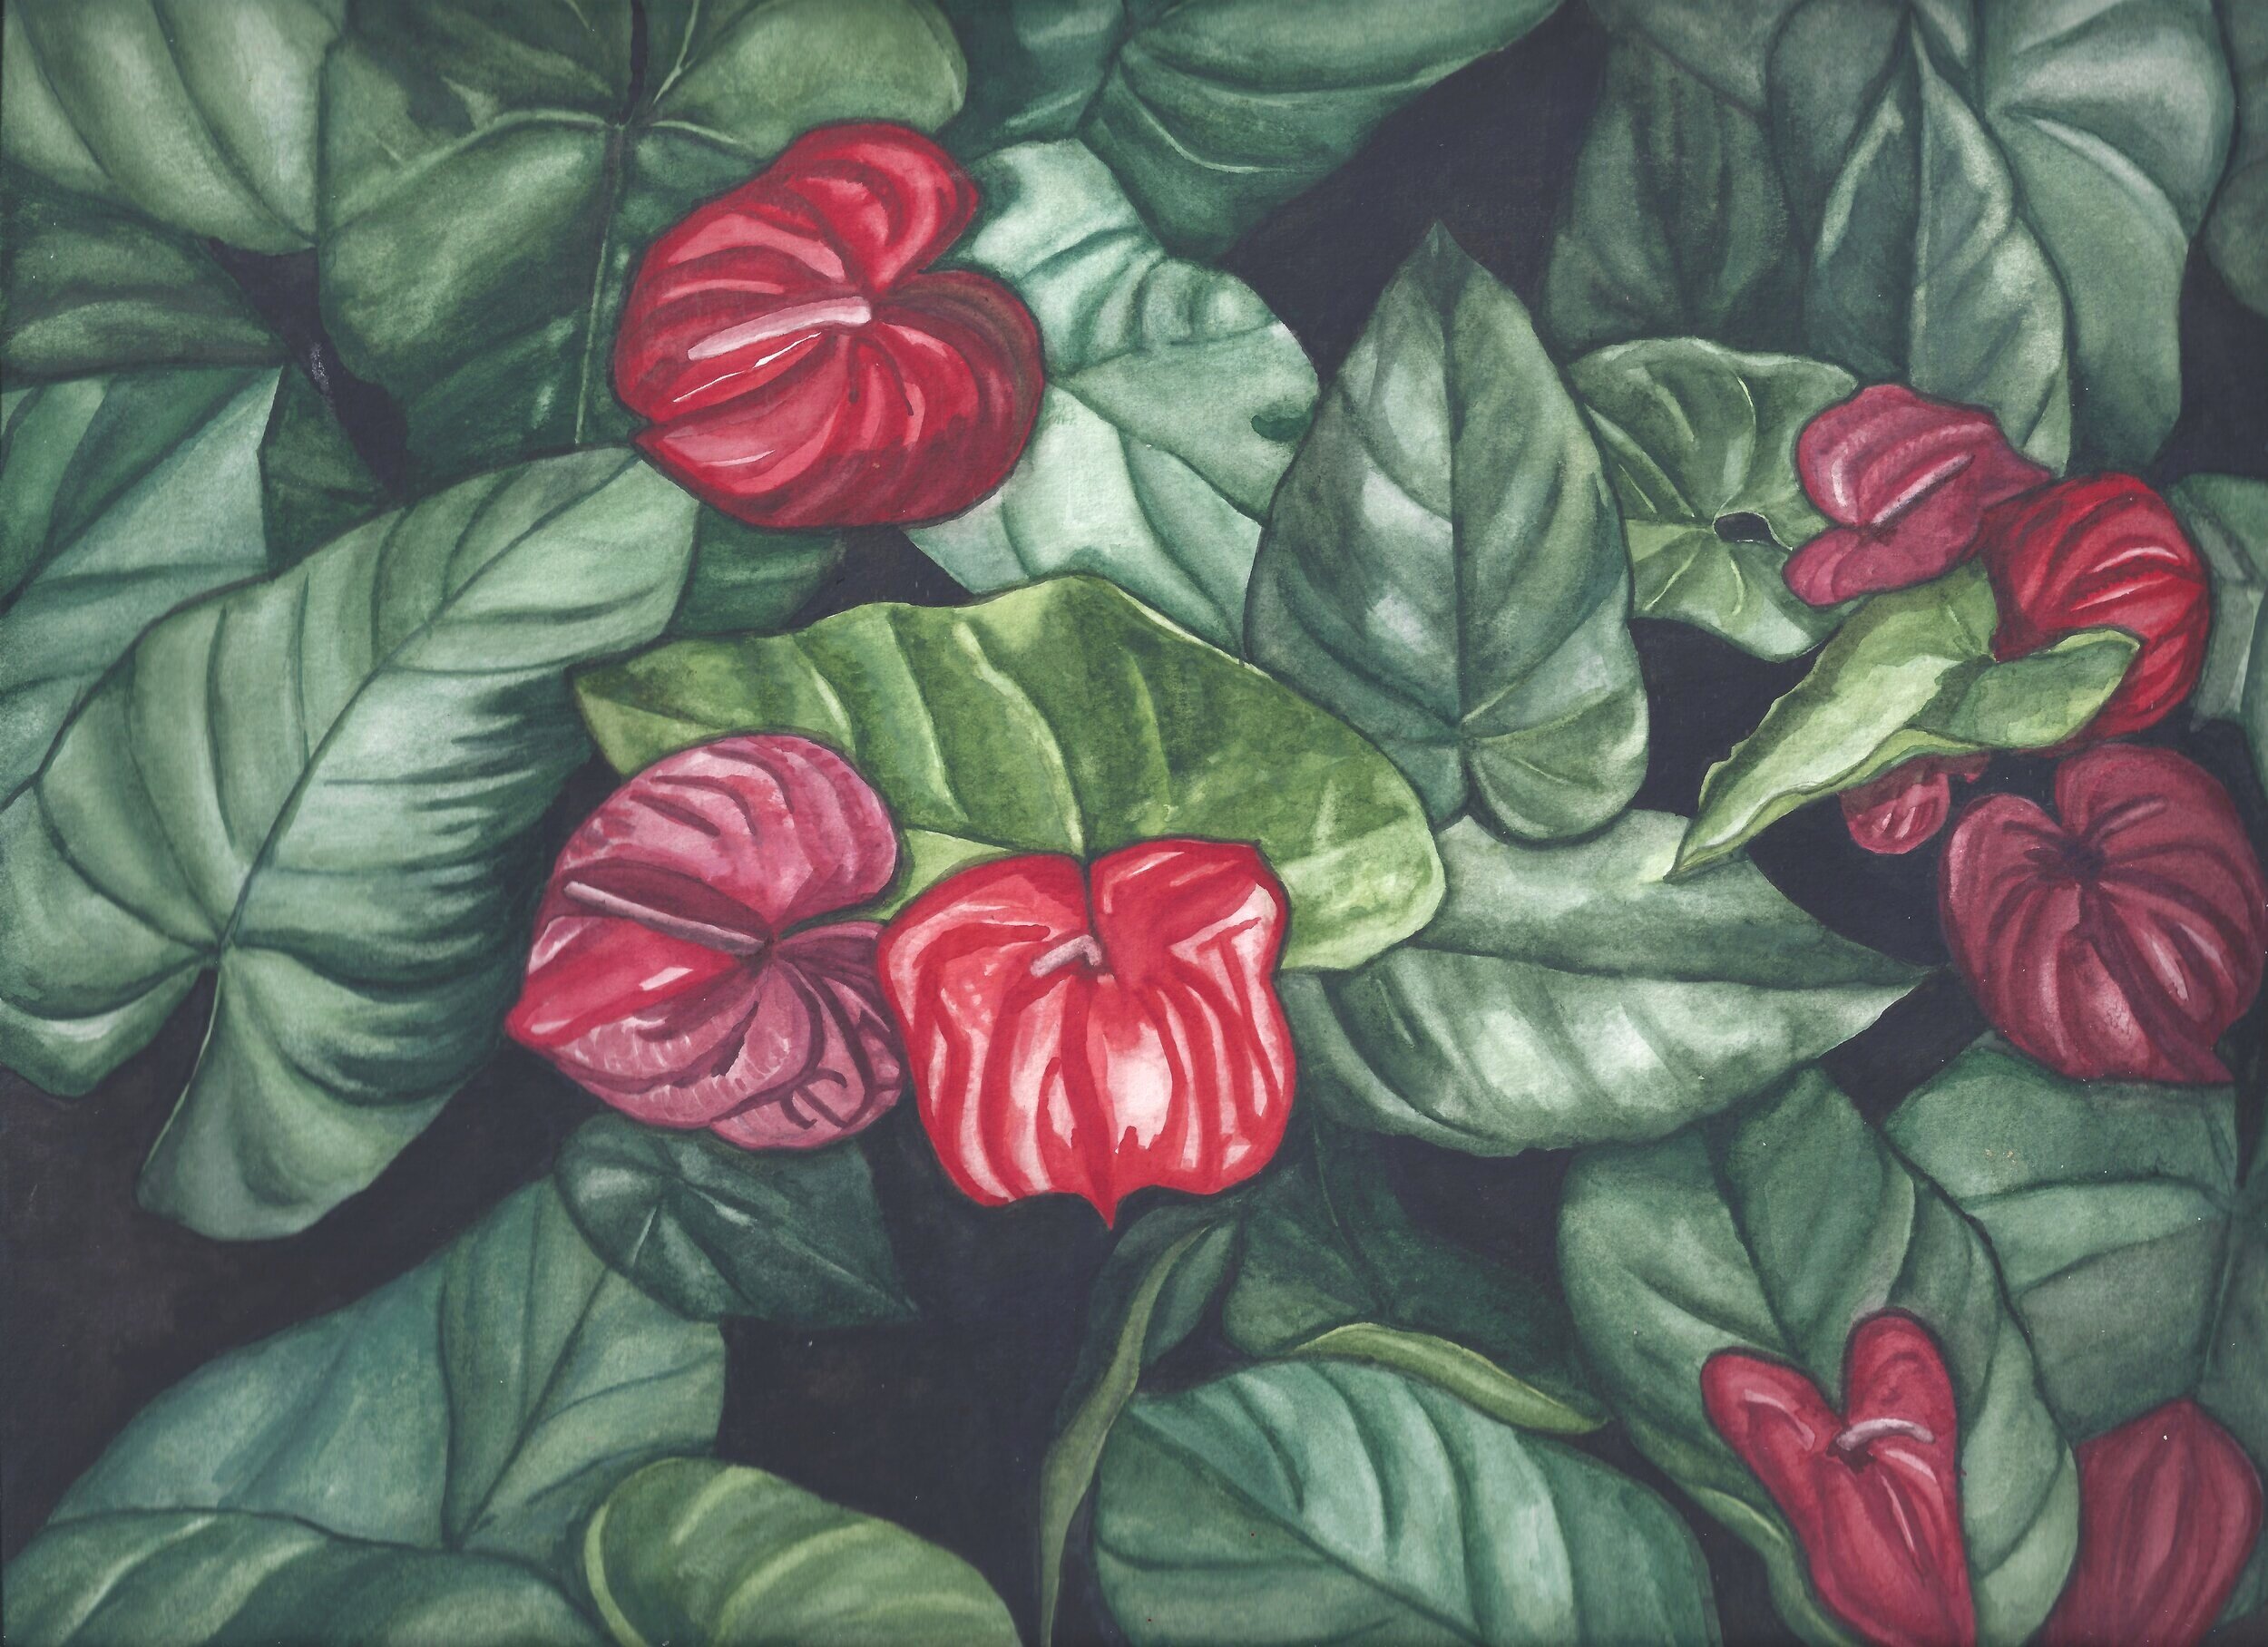   Anthurium andraeaneum  ( Painter’s-palette) , Watercolor on Paper, 9 x 12”, 2020 